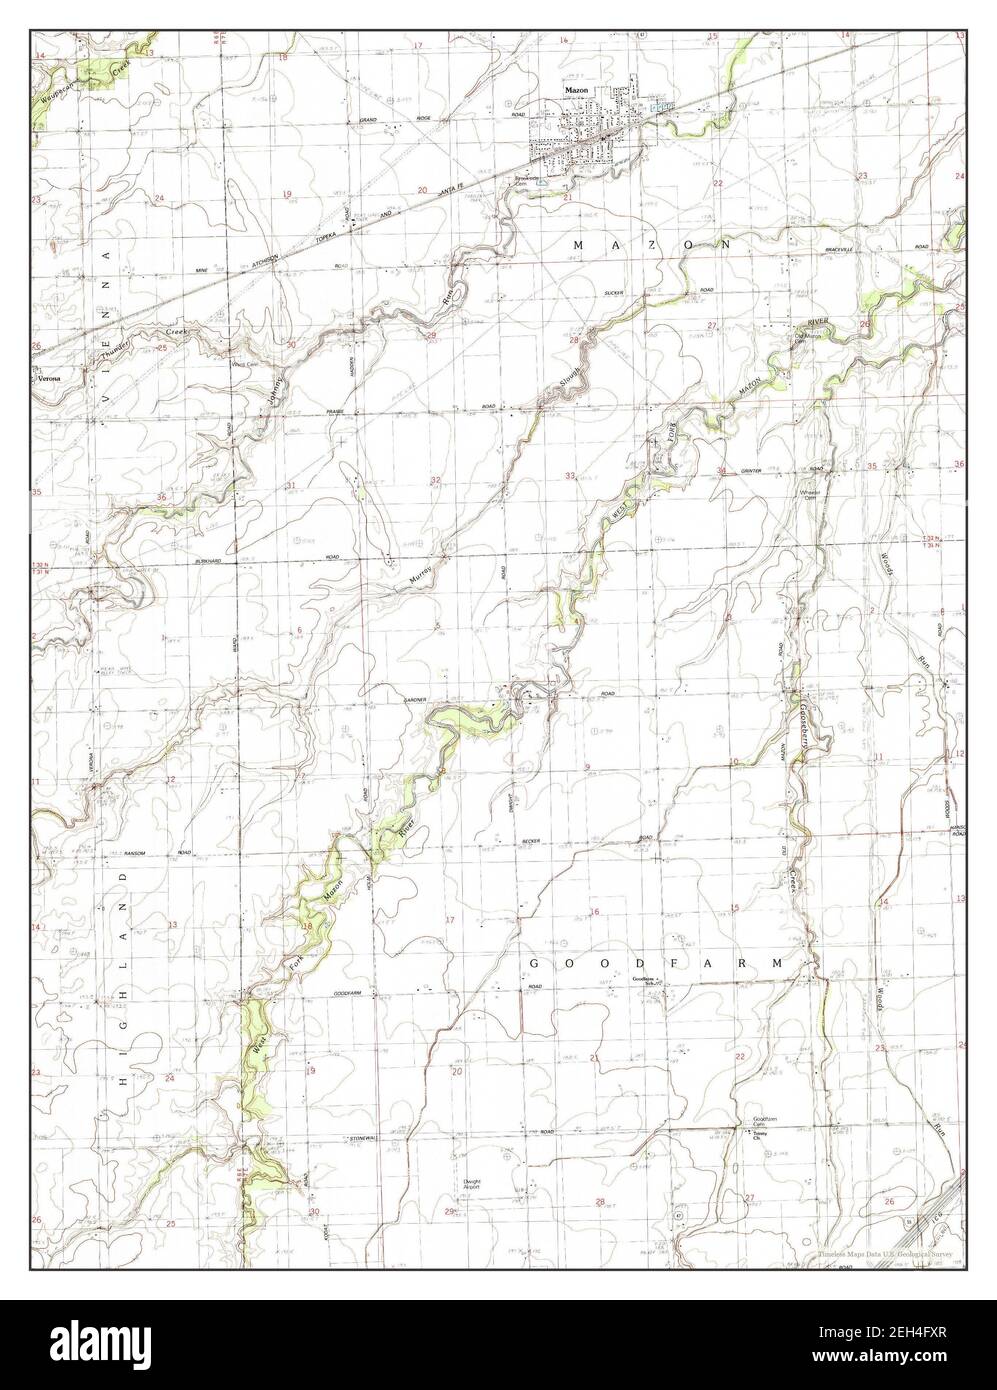 Mazon, Illinois, map 1983, 1:24000, United States of America by Timeless Maps, data U.S. Geological Survey Stock Photo